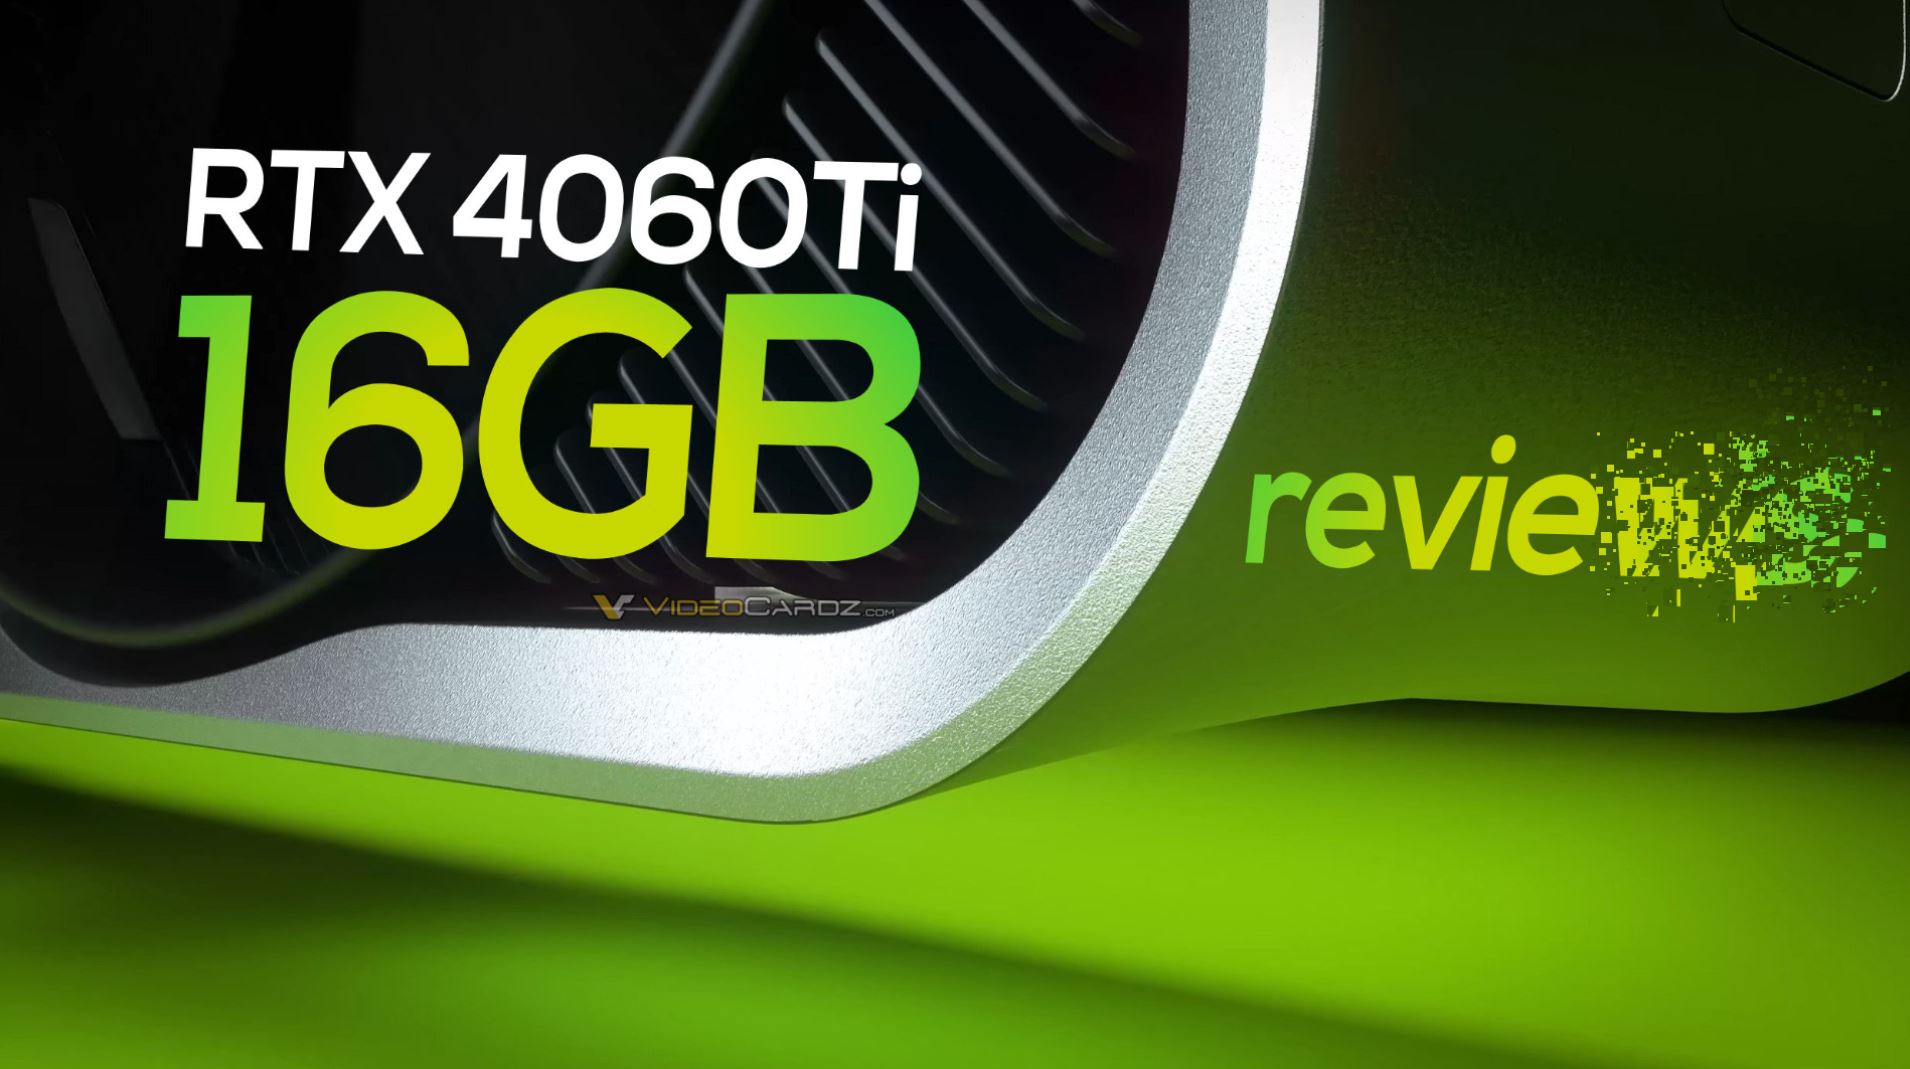 Nvidia GeForce RTX 4060 Ti 8GB Review